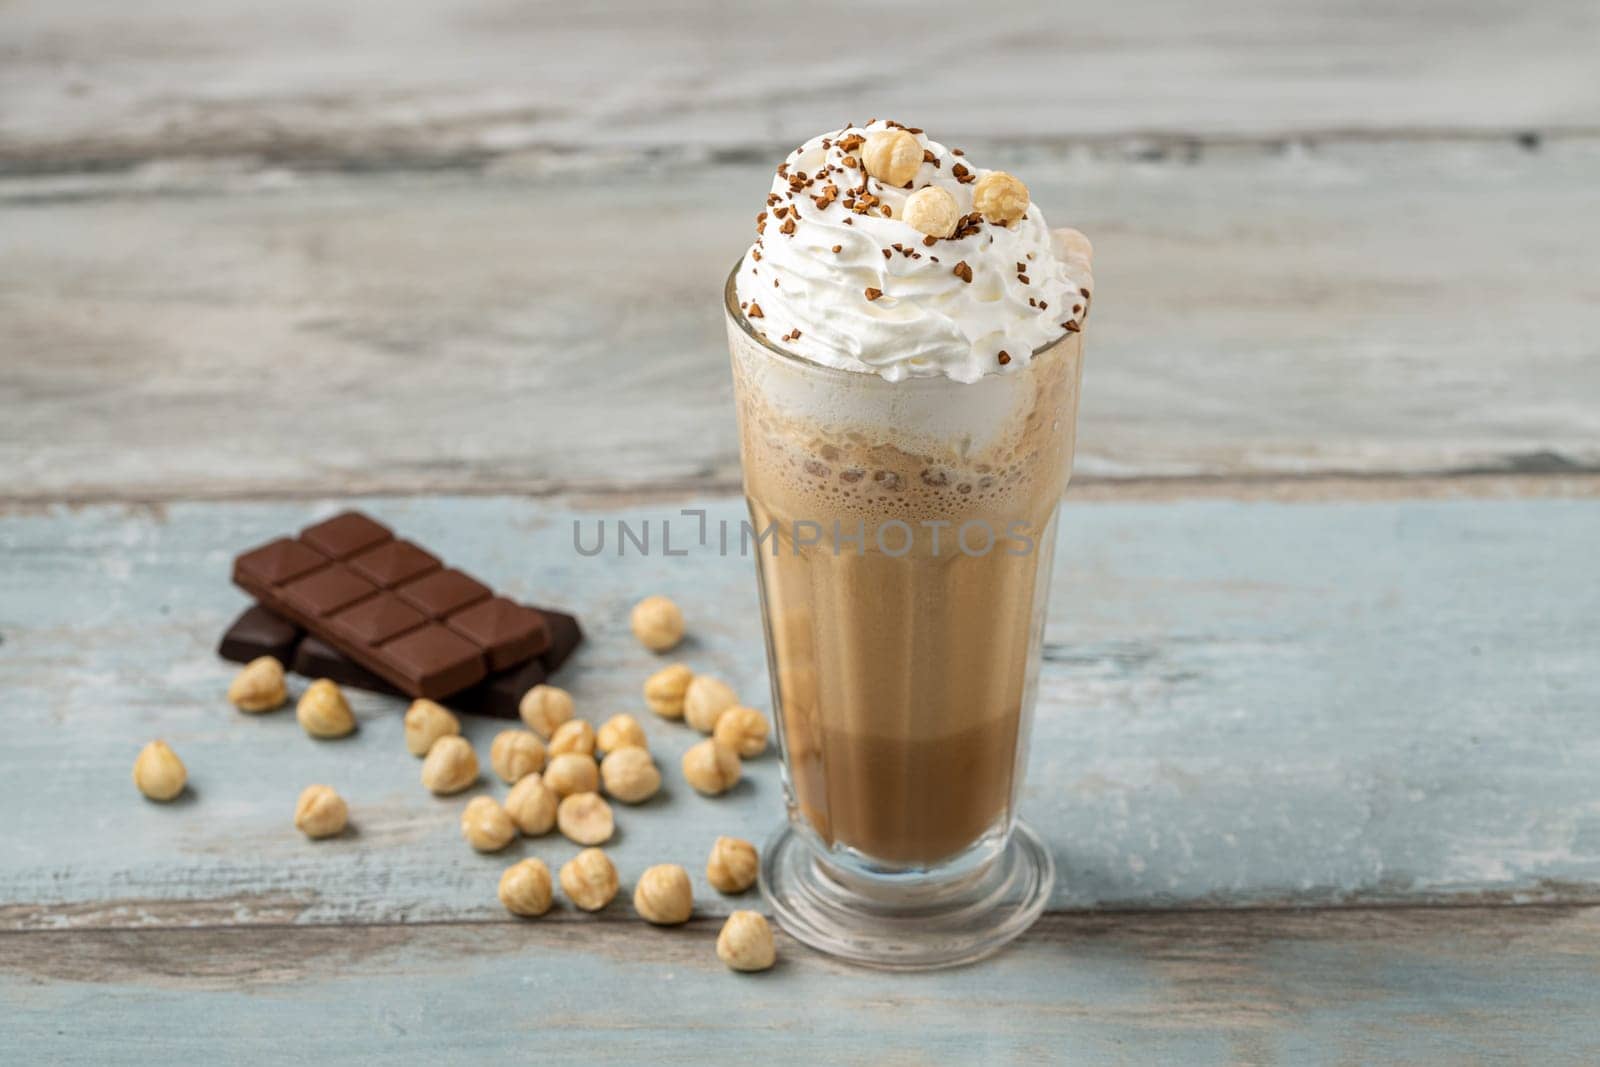 hazelnut and chocolate milkshake with coffee sprinkled on top